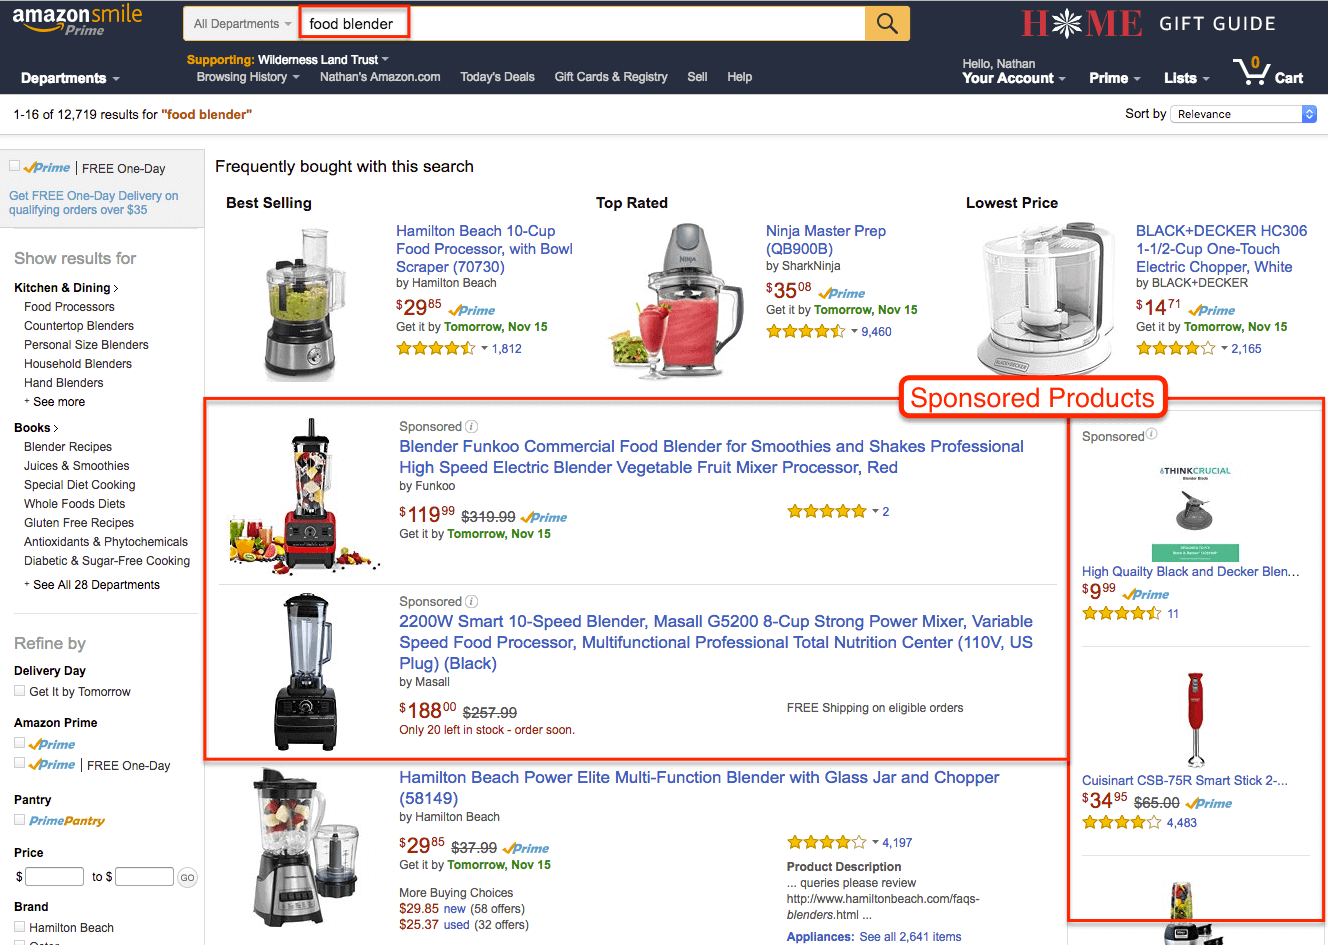 Amazon Sponsored Products